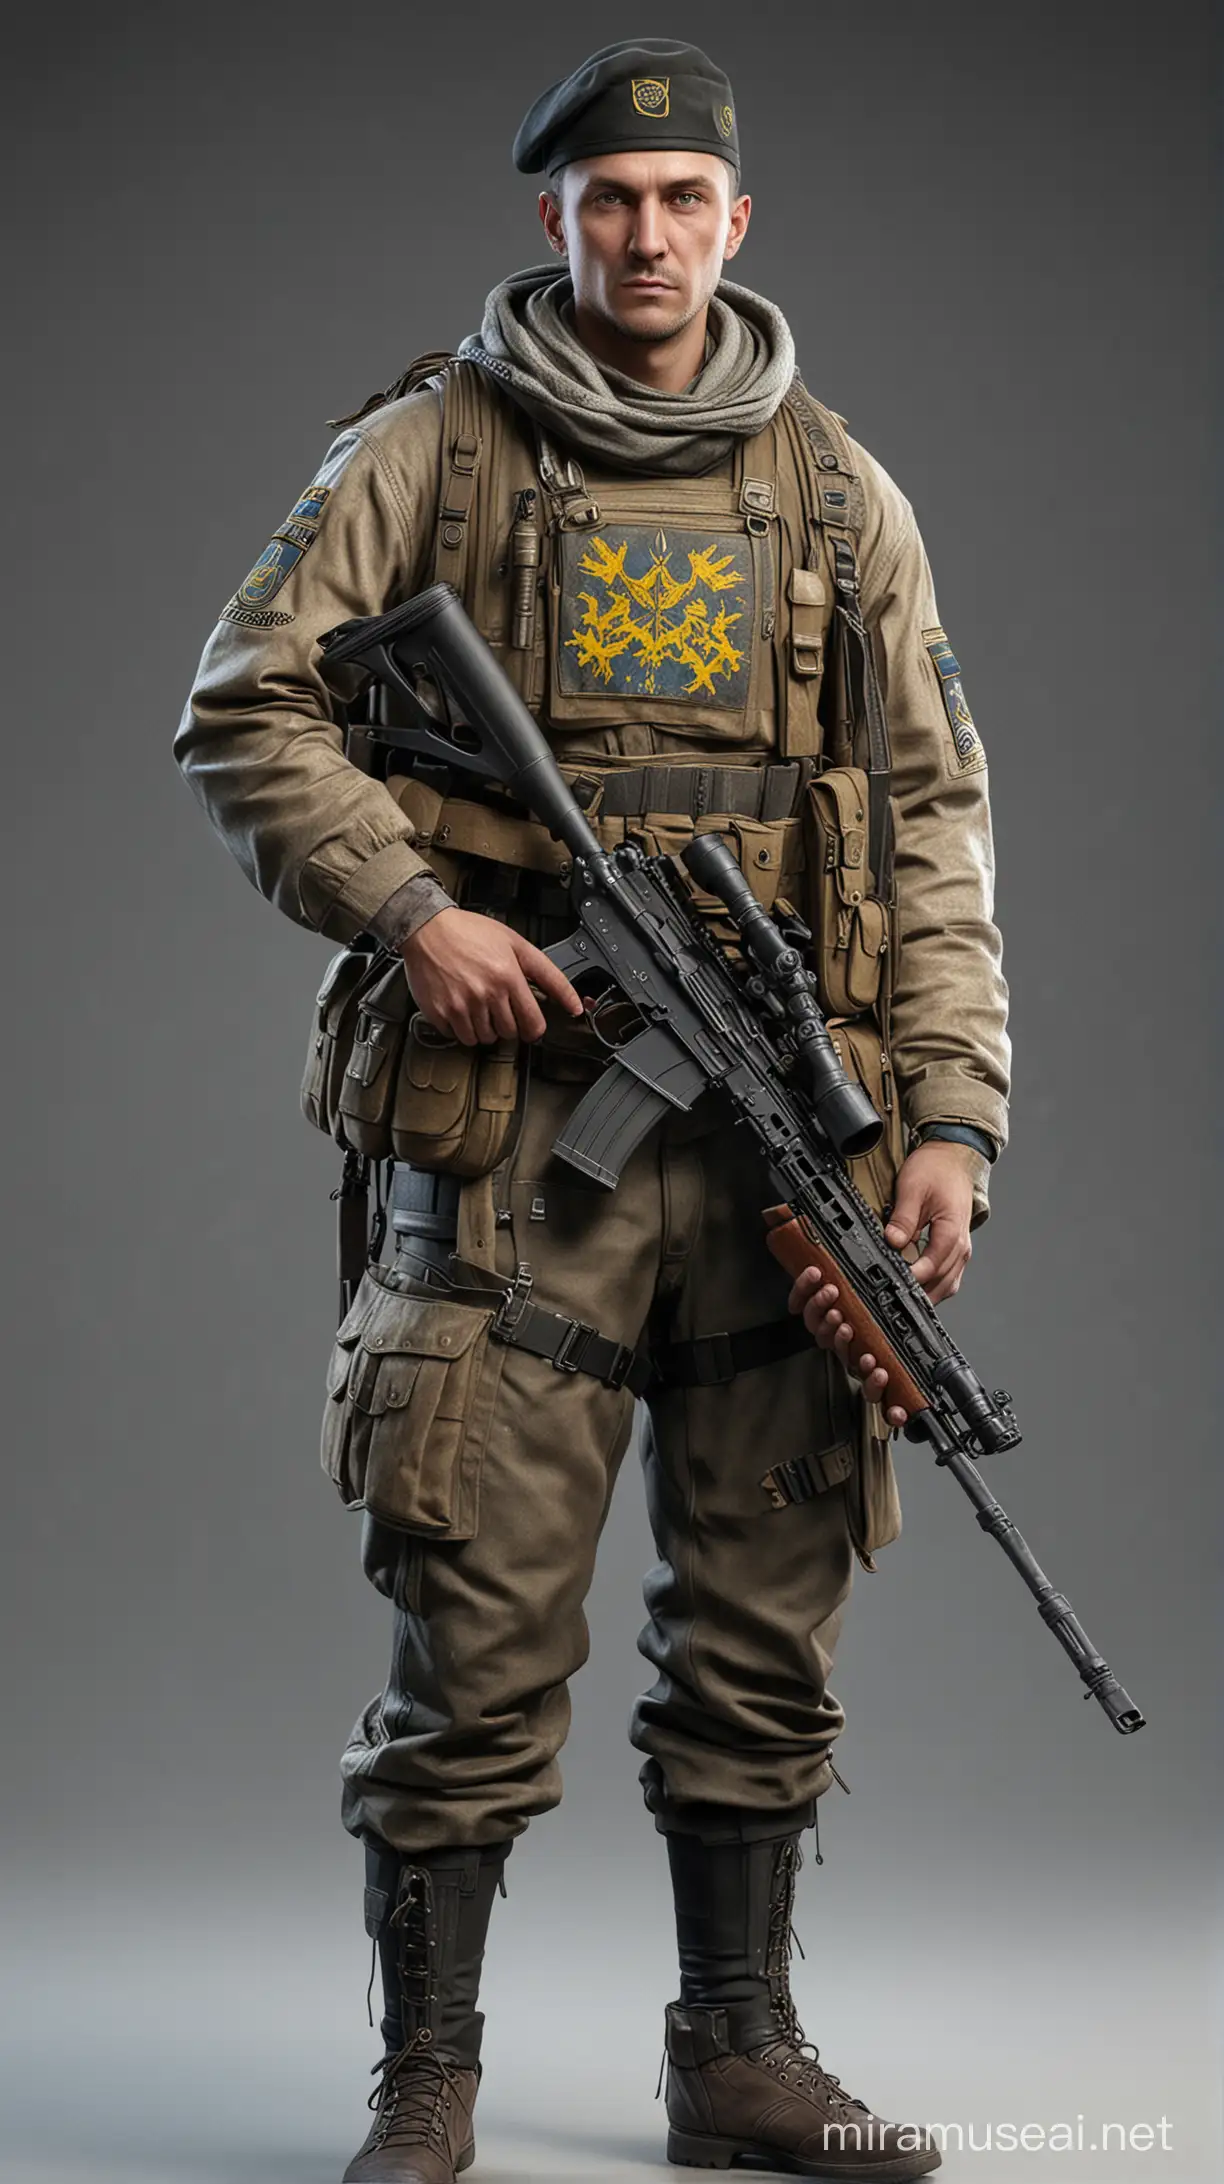 Hyperrealistic Ukrainian Sniper Holding Sniper Rifle